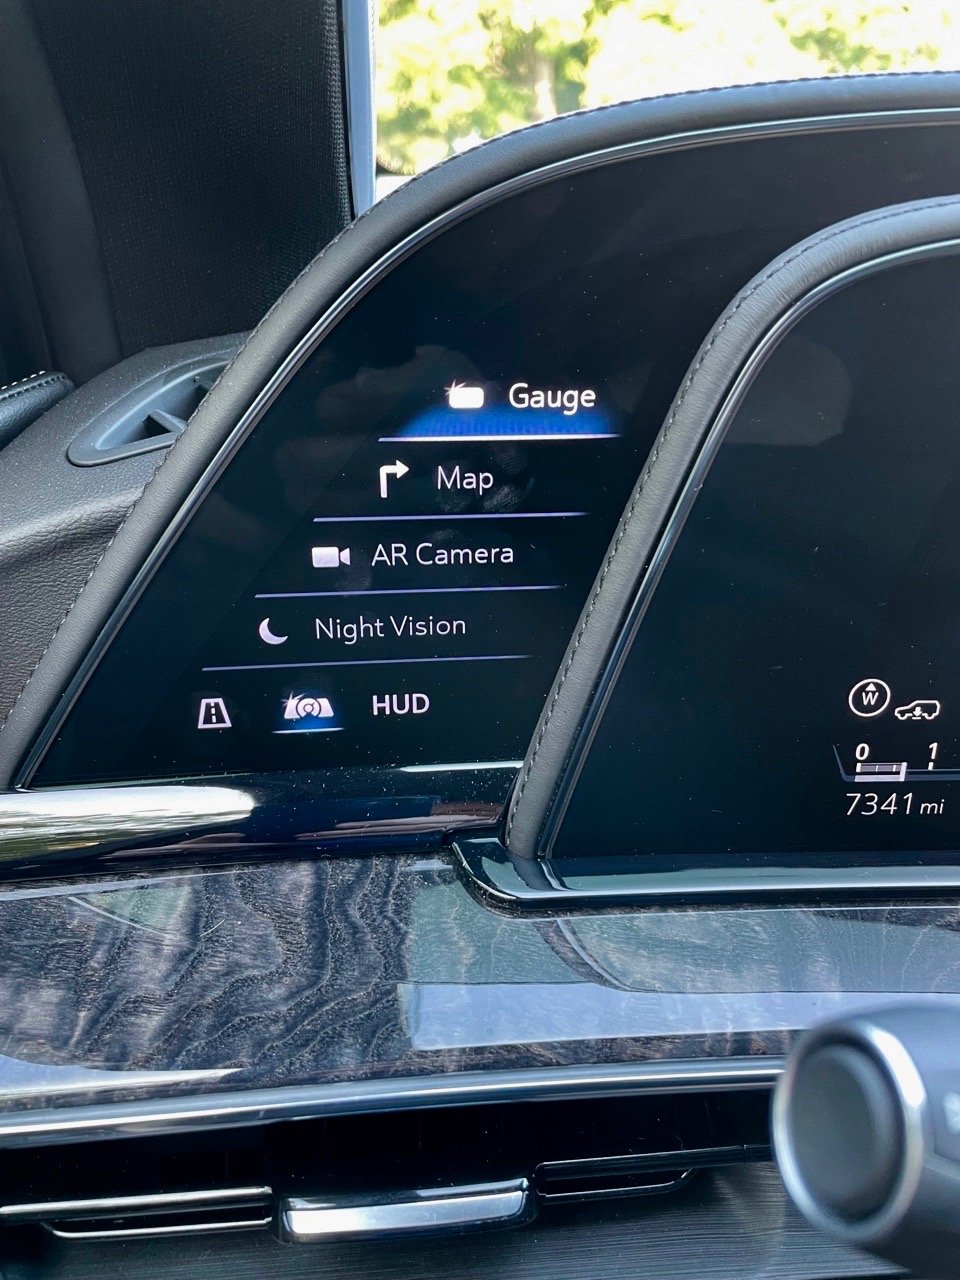 2021-Cadillac-Escalade-side-digital-display-trip-carprousa.